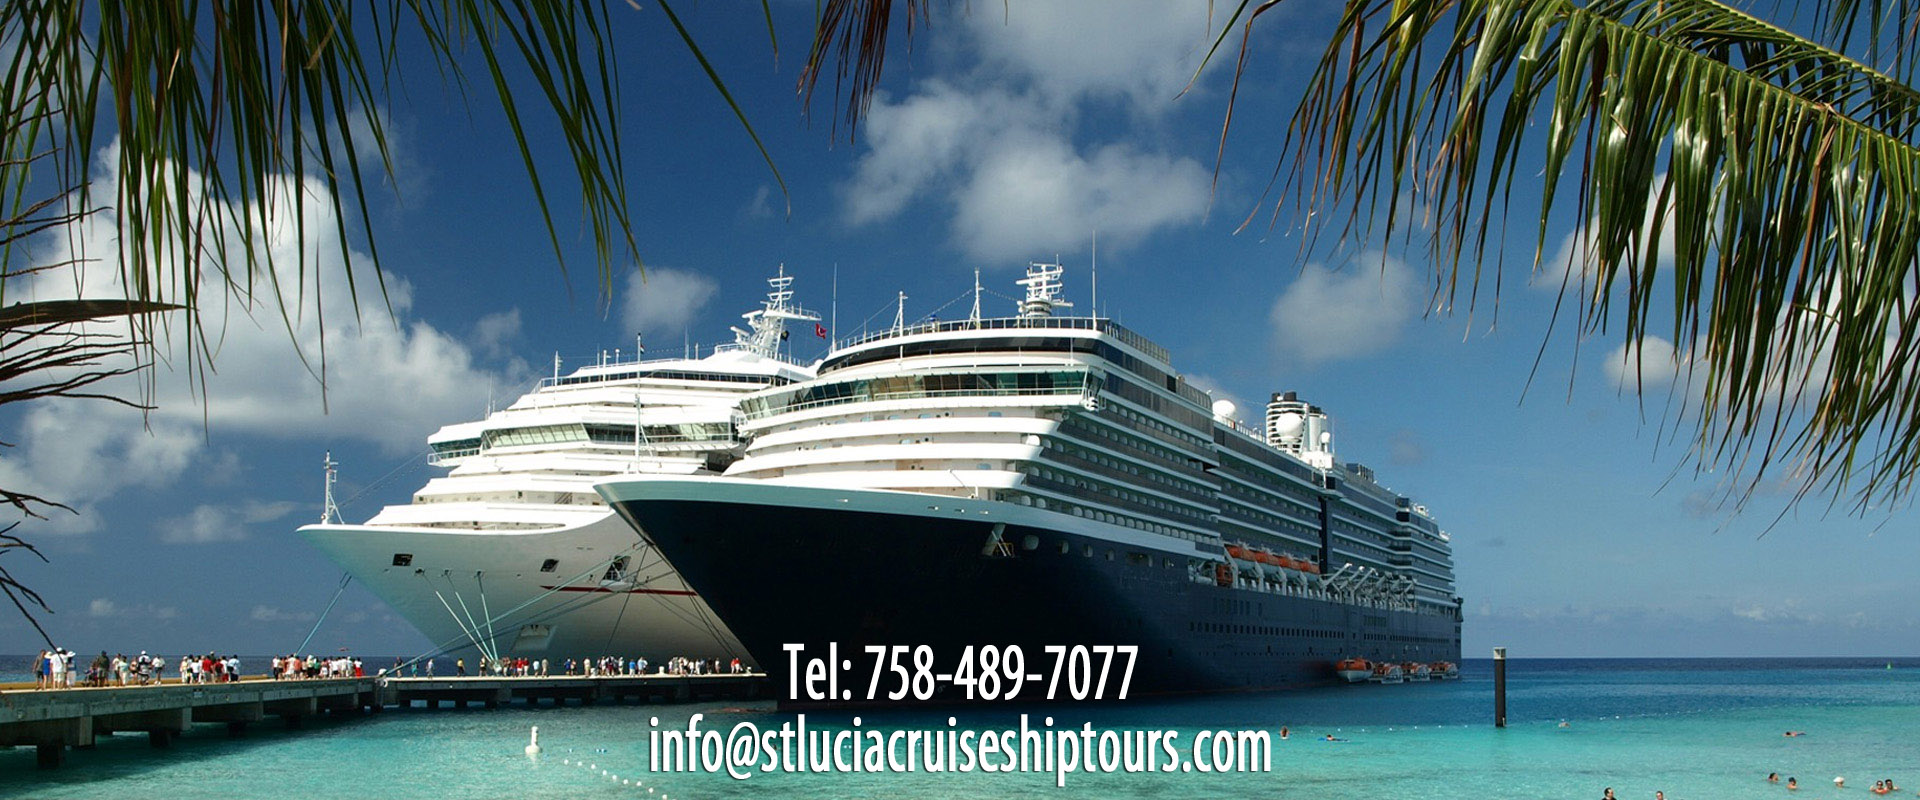 Saint Lucia Cruise Ship Tours